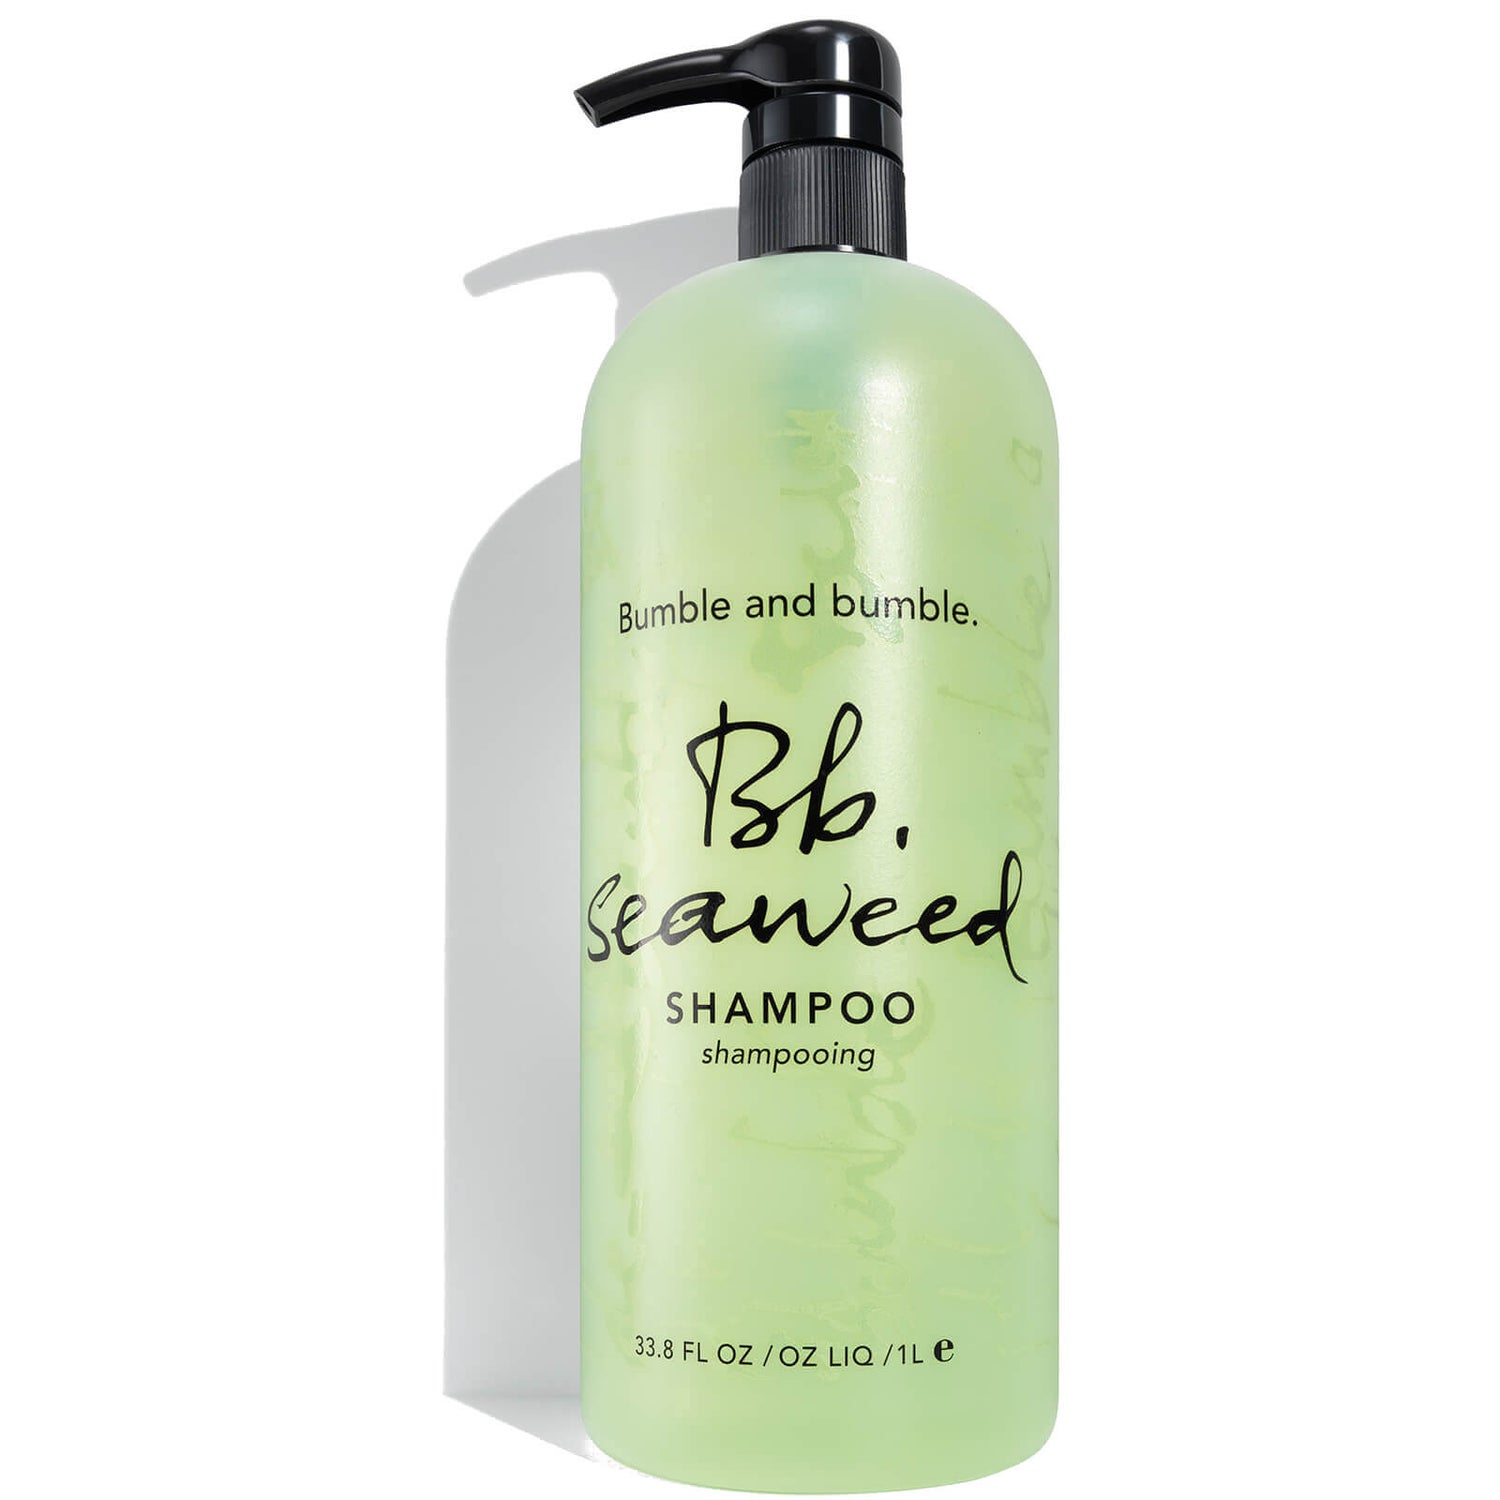 Bumble and bumble Seaweed Shampoo (Feuchtigkeit) 1000ml